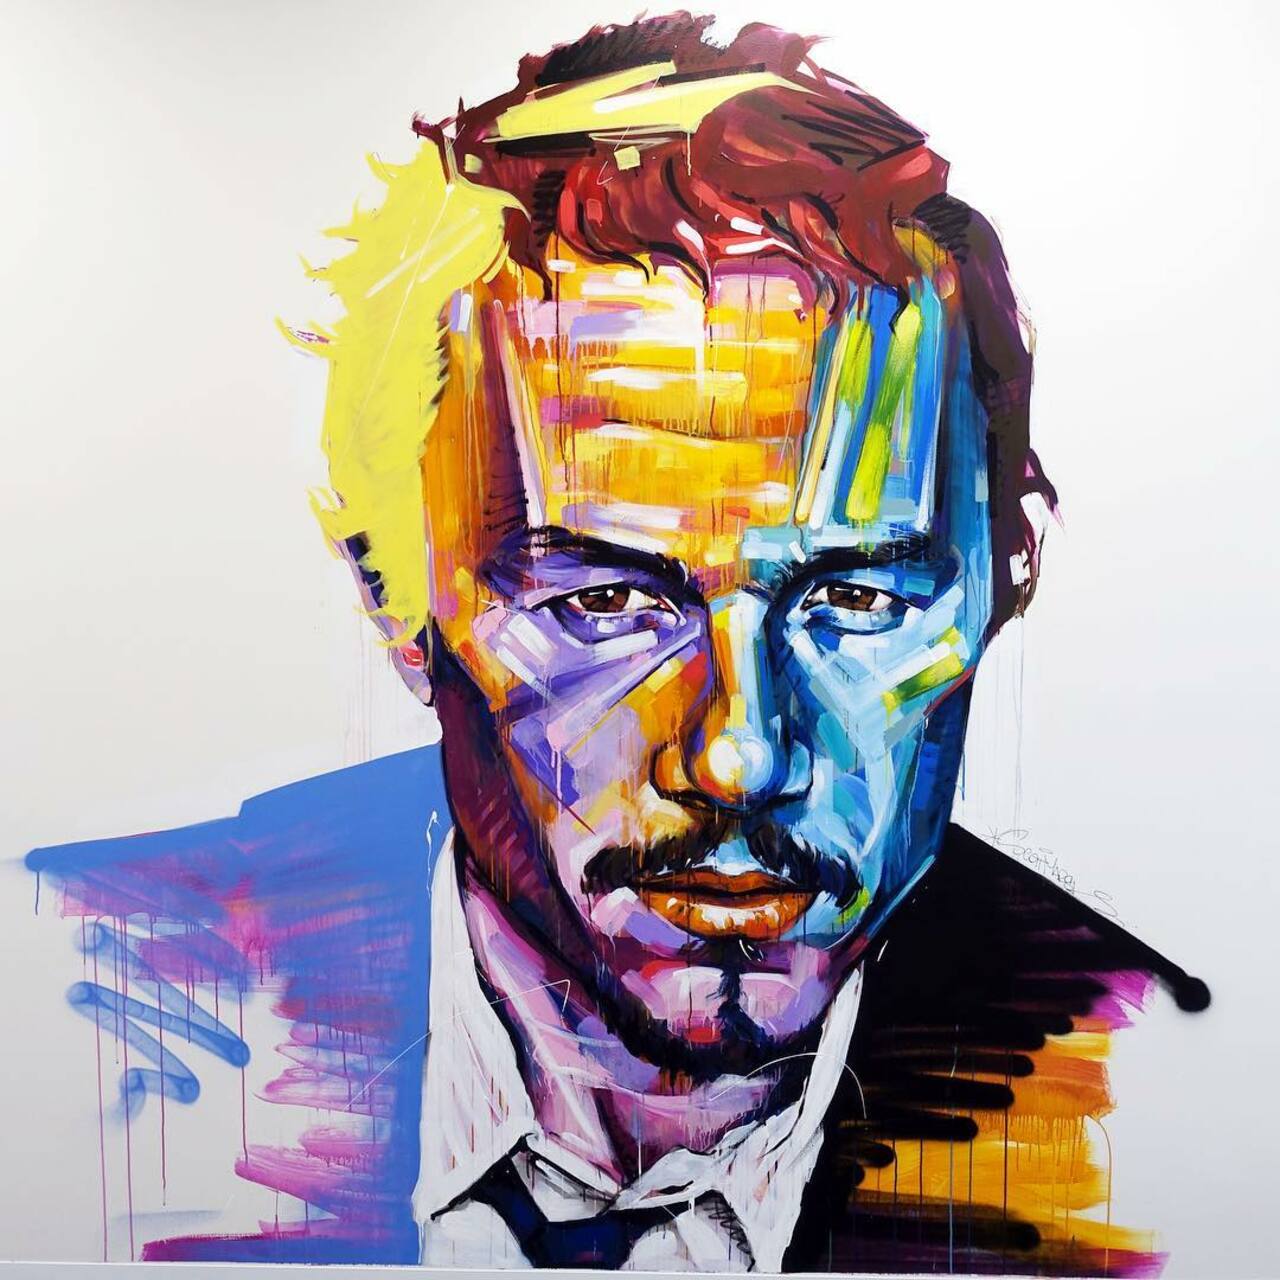  Heath Ledger Art: Heath Ledger in a commisioned interior mural-tribute by Australian street-artist Scott Marsh, in Heath’s hometown, Perth, 2017.#HeathLedger #ScottMarsh #Perth #Australia #Australian #Artist #Actor #Icon #Mural #Graffiti #StreetArt #HeathLedgerFanart https://t.co/ziNyjNg9kk